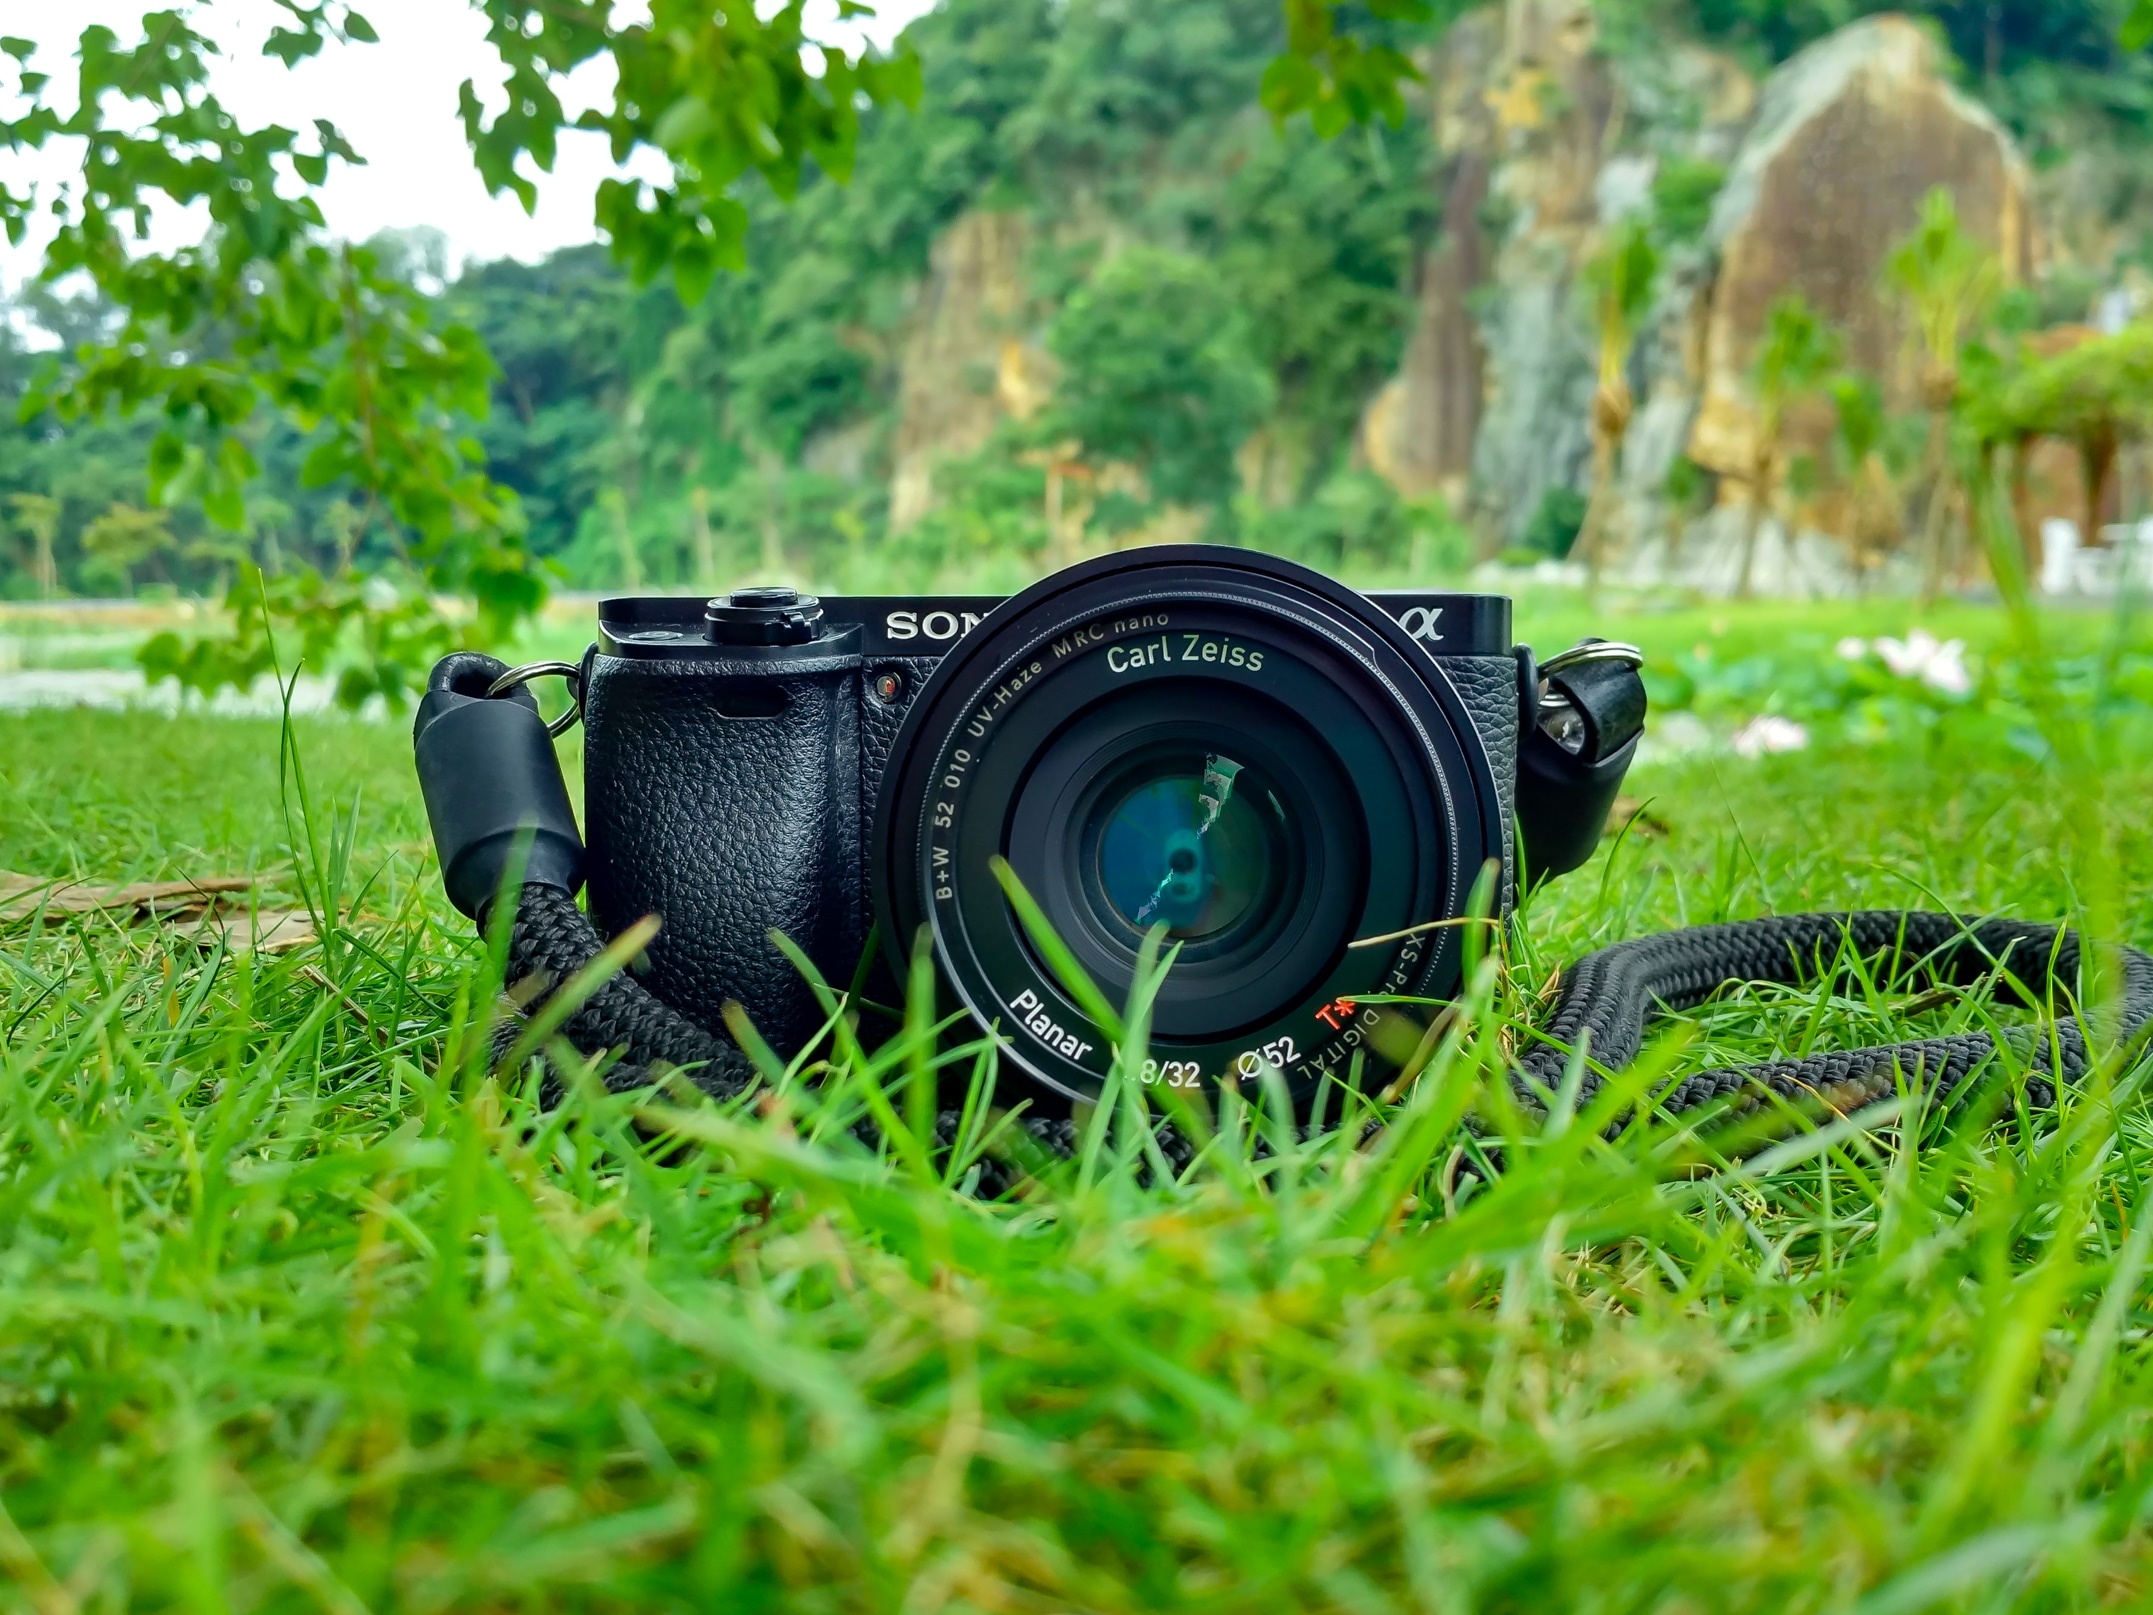 dslr photography wallpaper,grass,green,cameras & optics,camera,camera lens